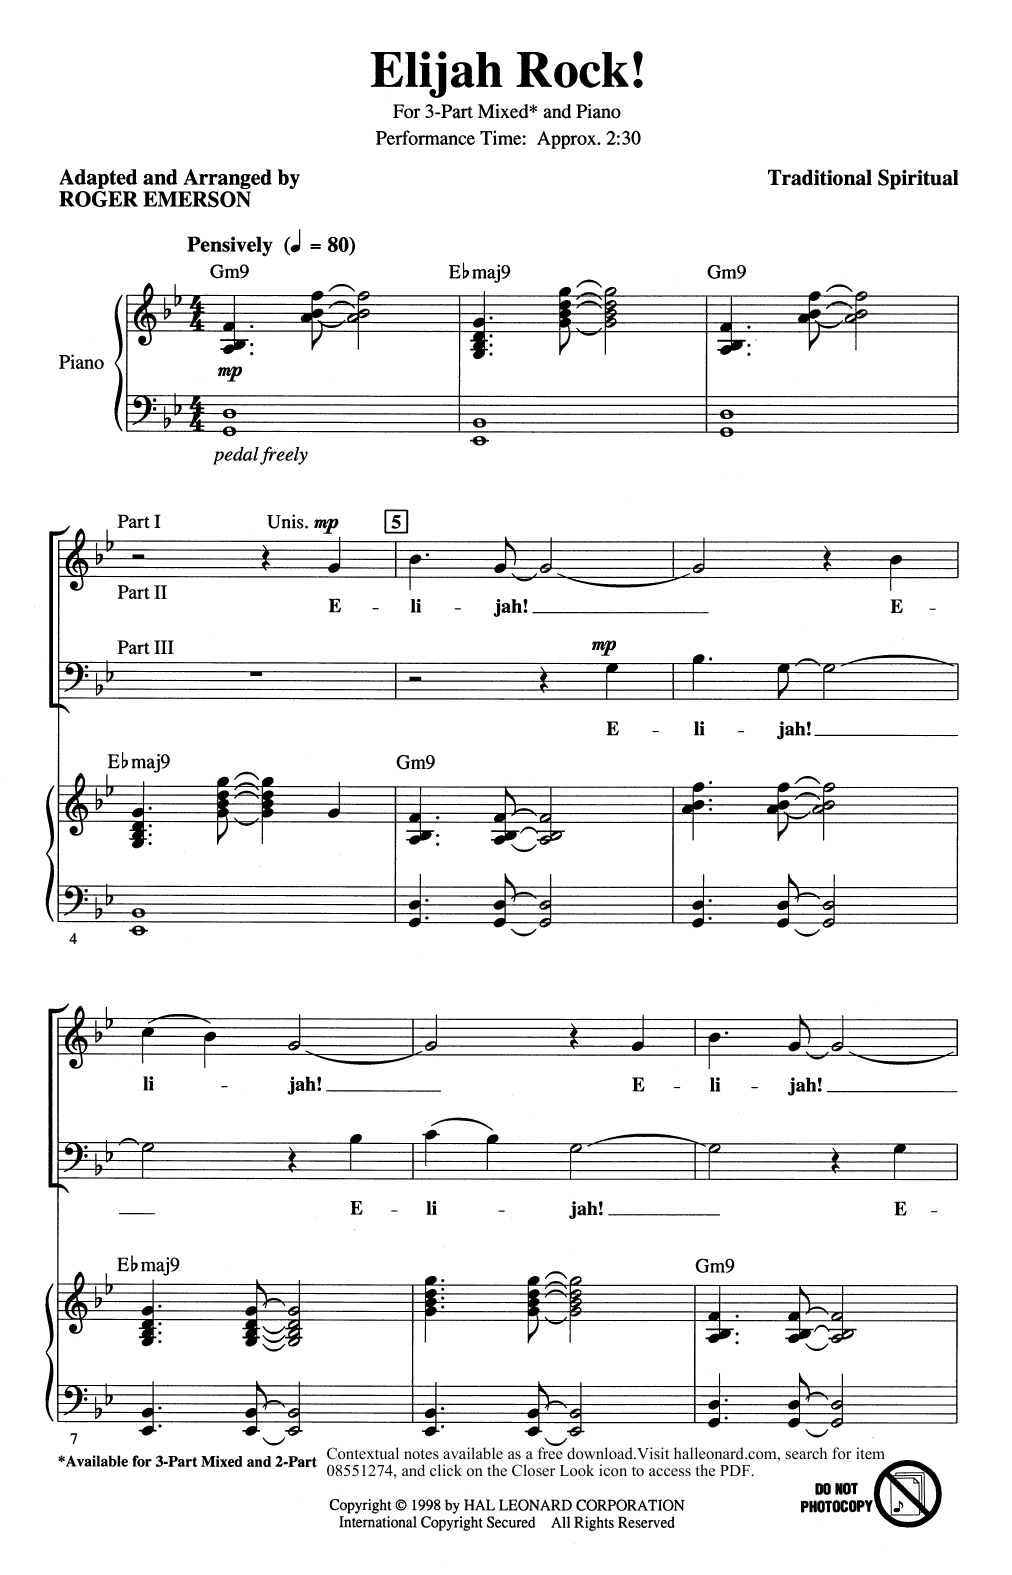 Traditional Spiritual Elijah Rock (arr. Roger Emerson) sheet music notes and chords arranged for 3-Part Mixed Choir